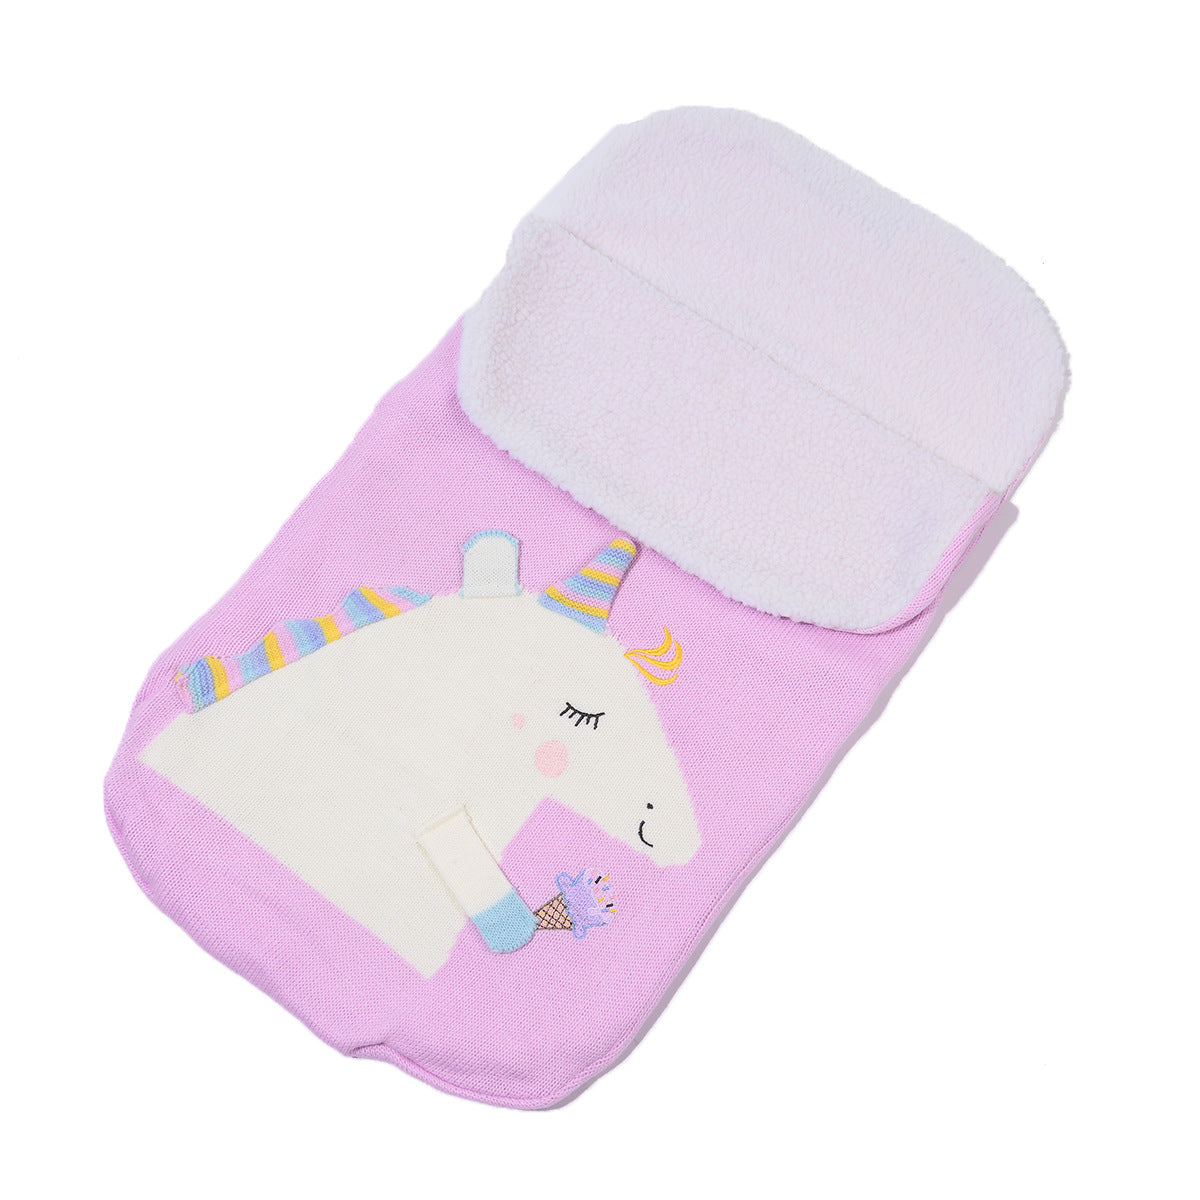 Unicorn Print Velevt Knitting Sleeping Bag for Cart-Pink-Free Shipping at meselling99